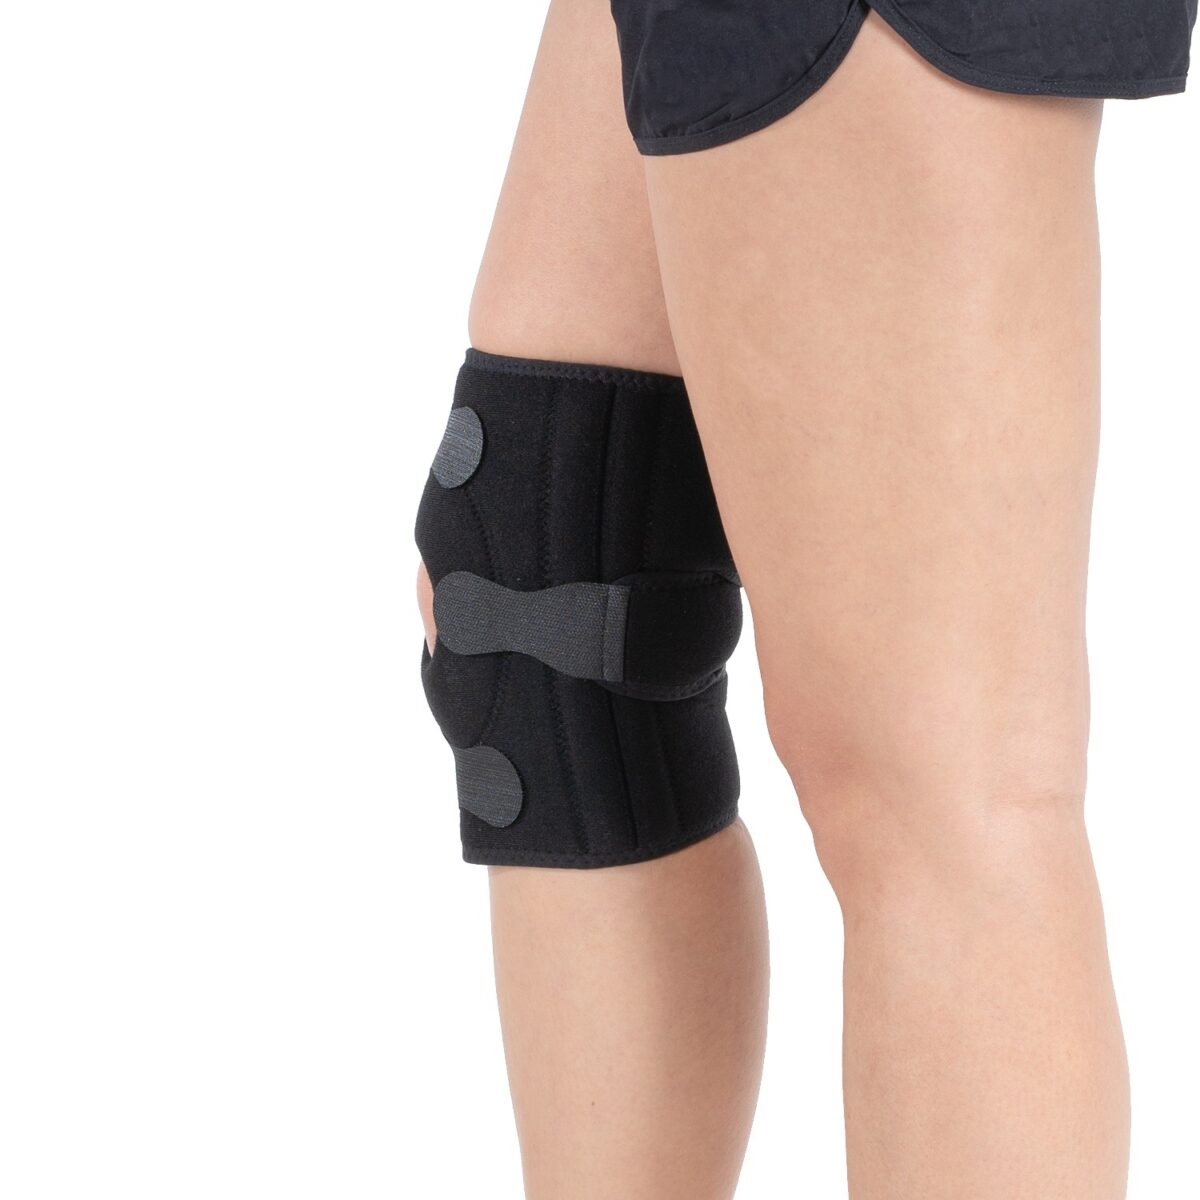 wingmed orthopedic equipments W508 ligament knee support short 35